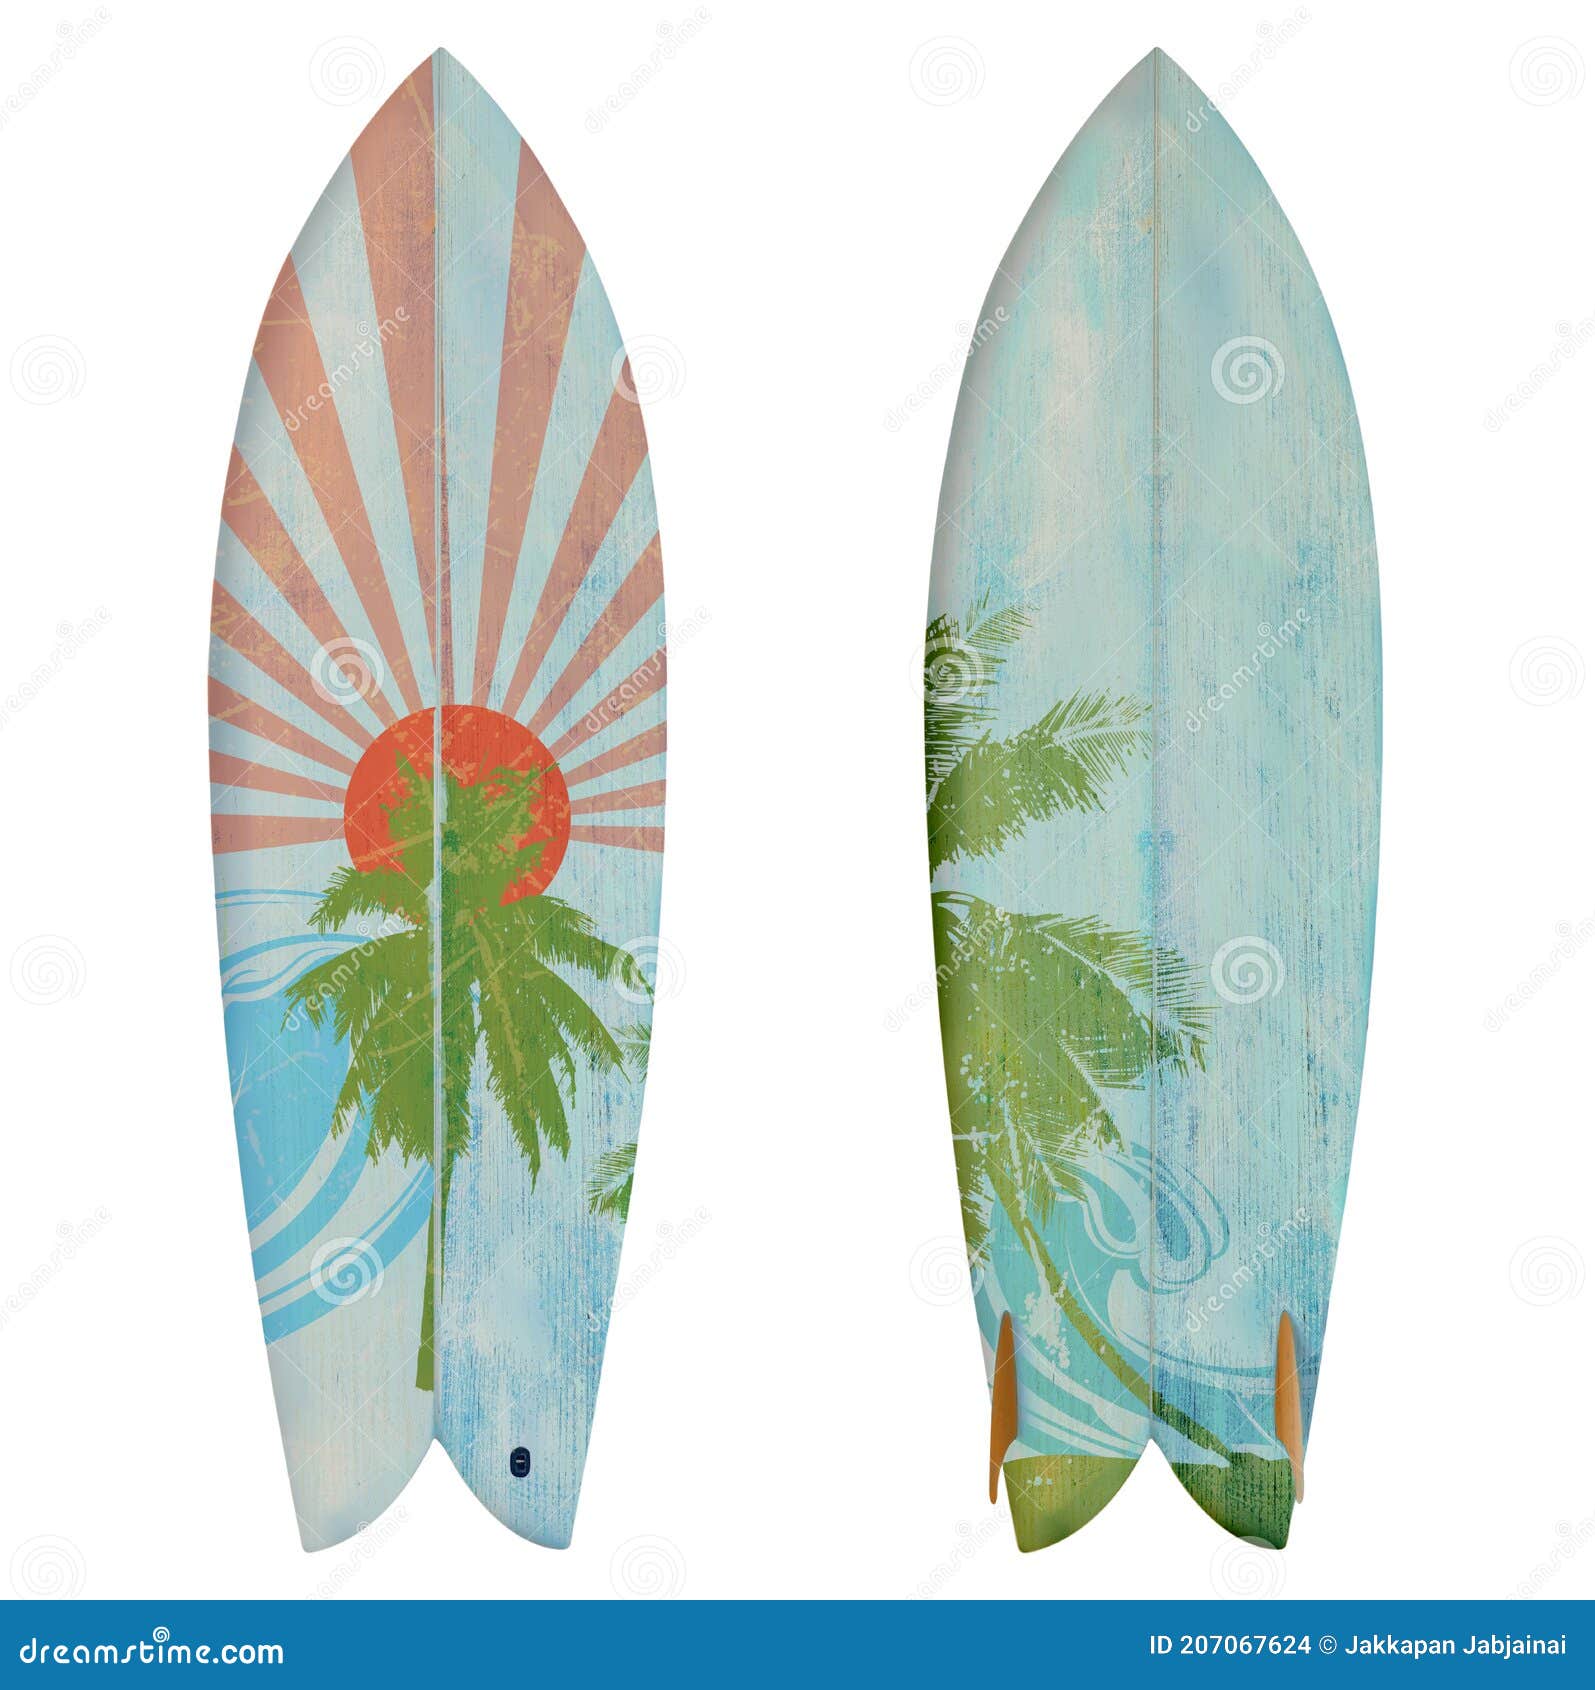 vintage wood fish board surfboard